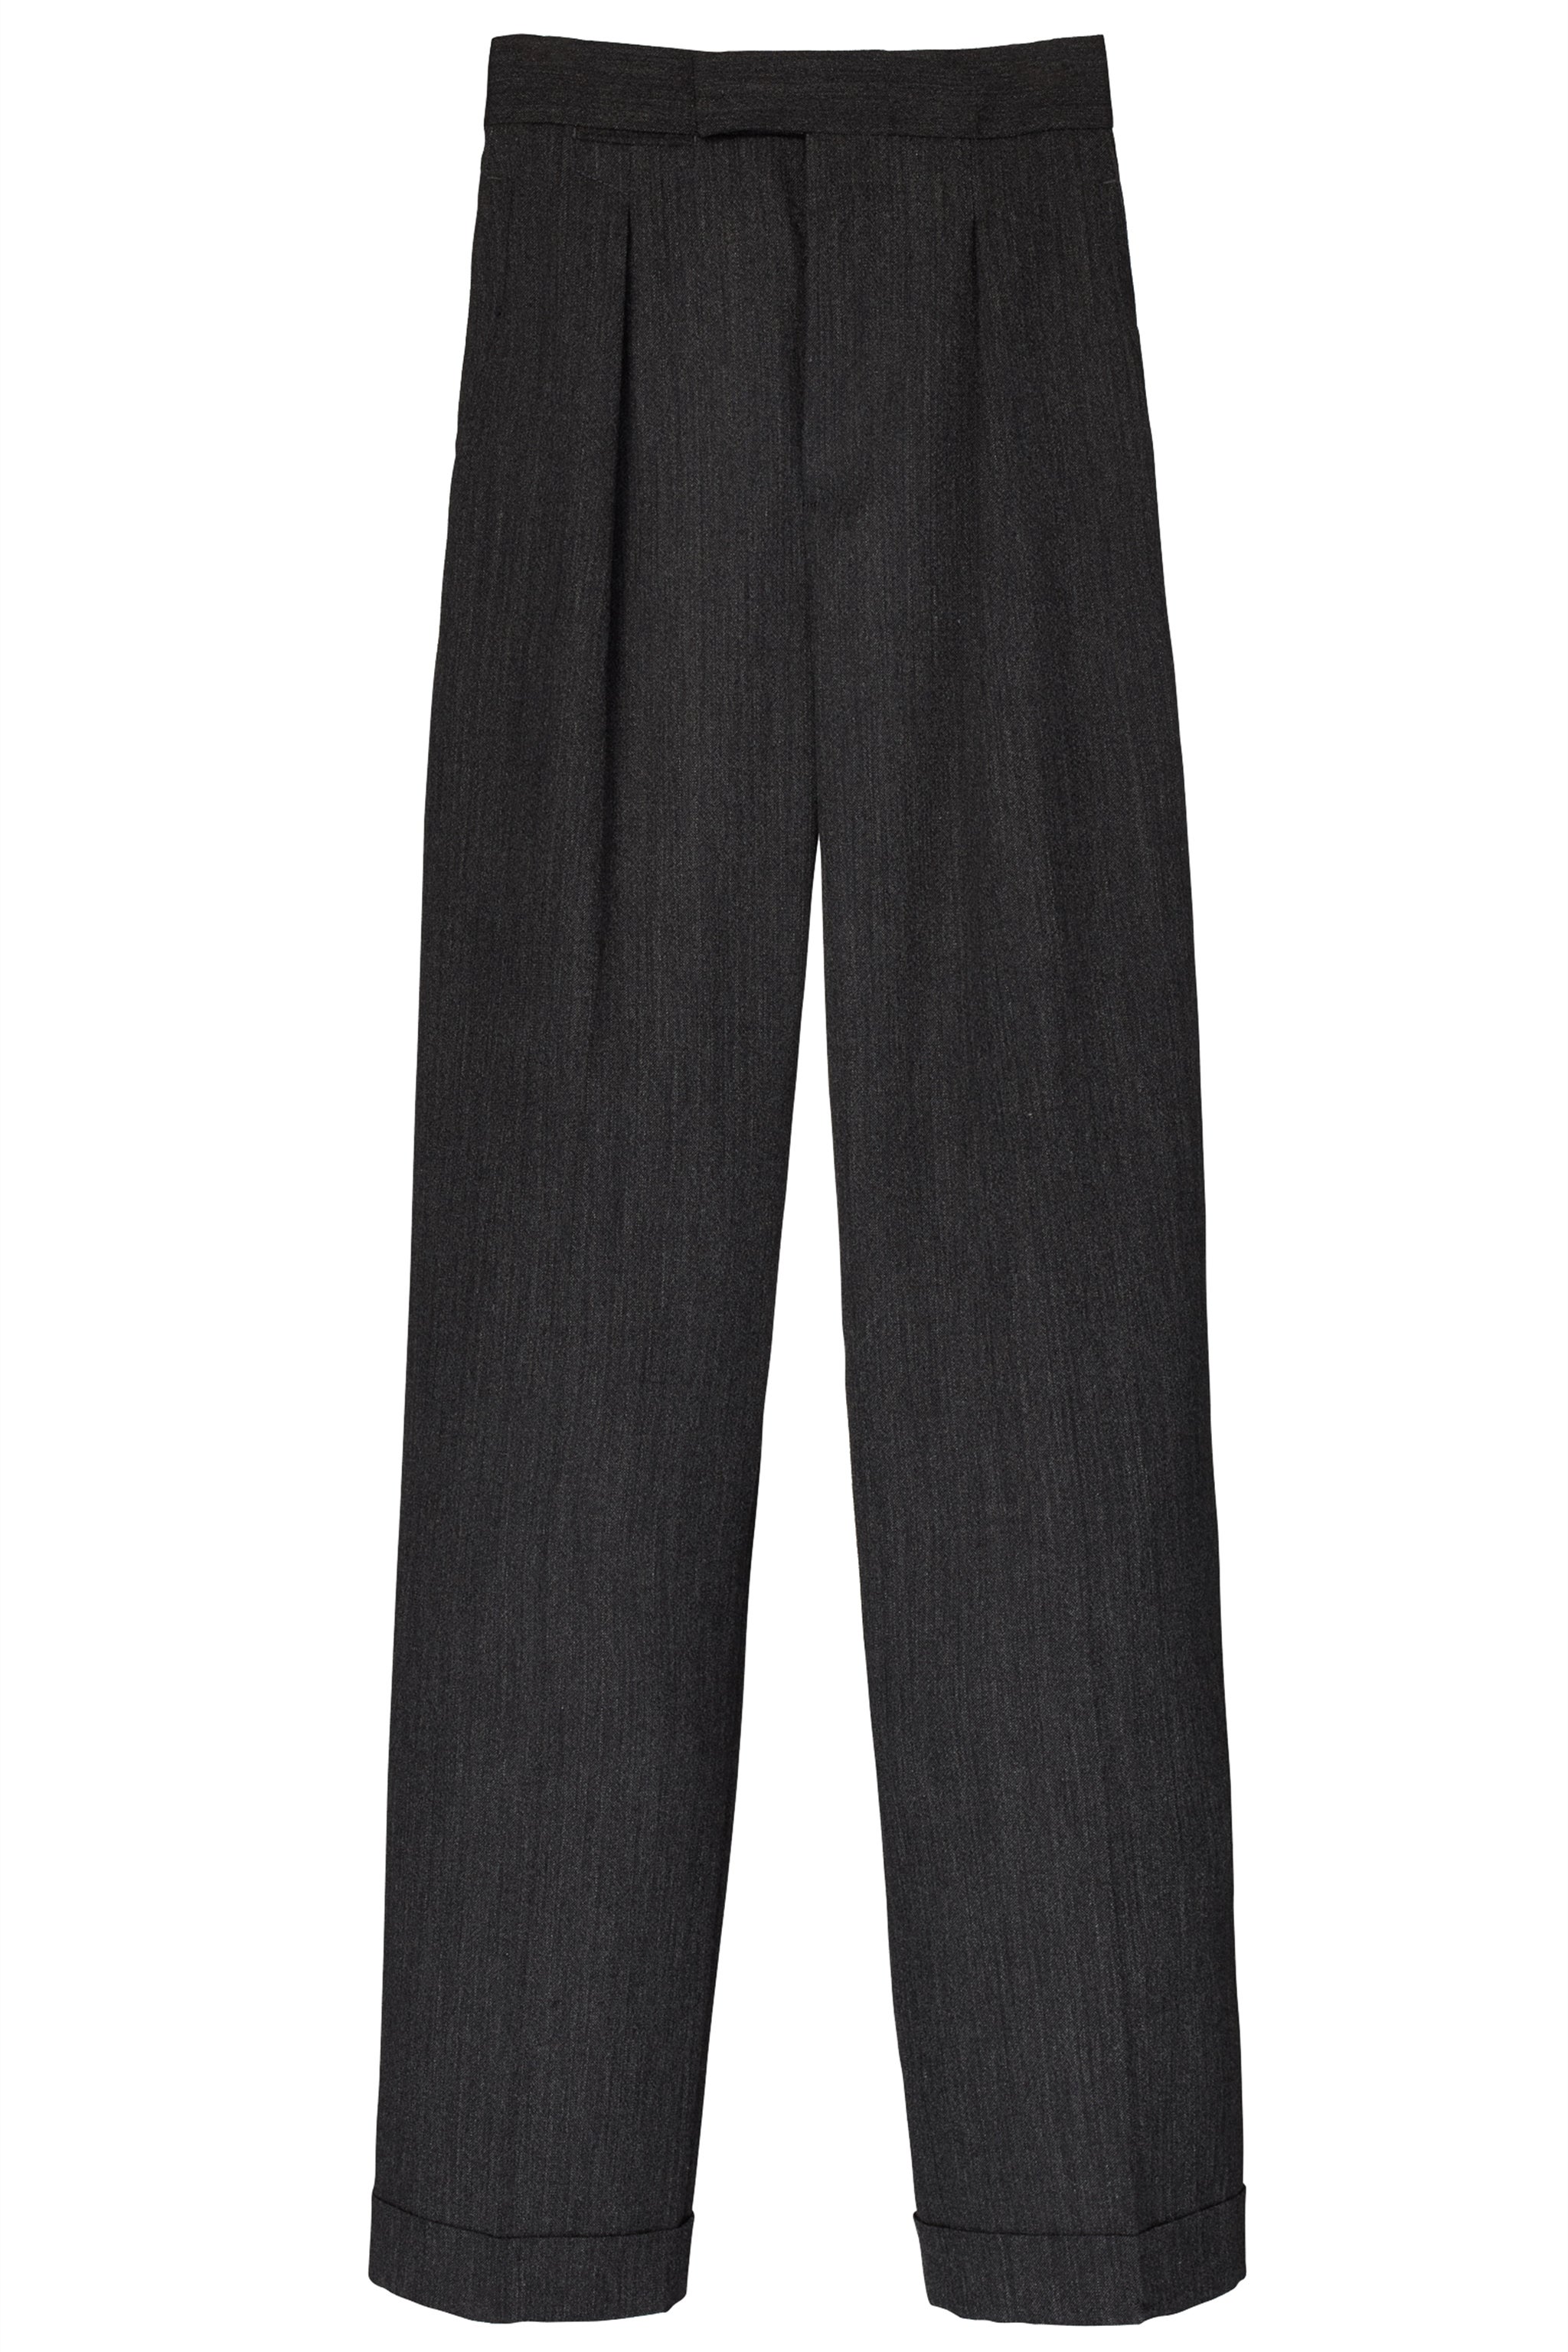 Zara Campaign + Straight Cut Wool Pants